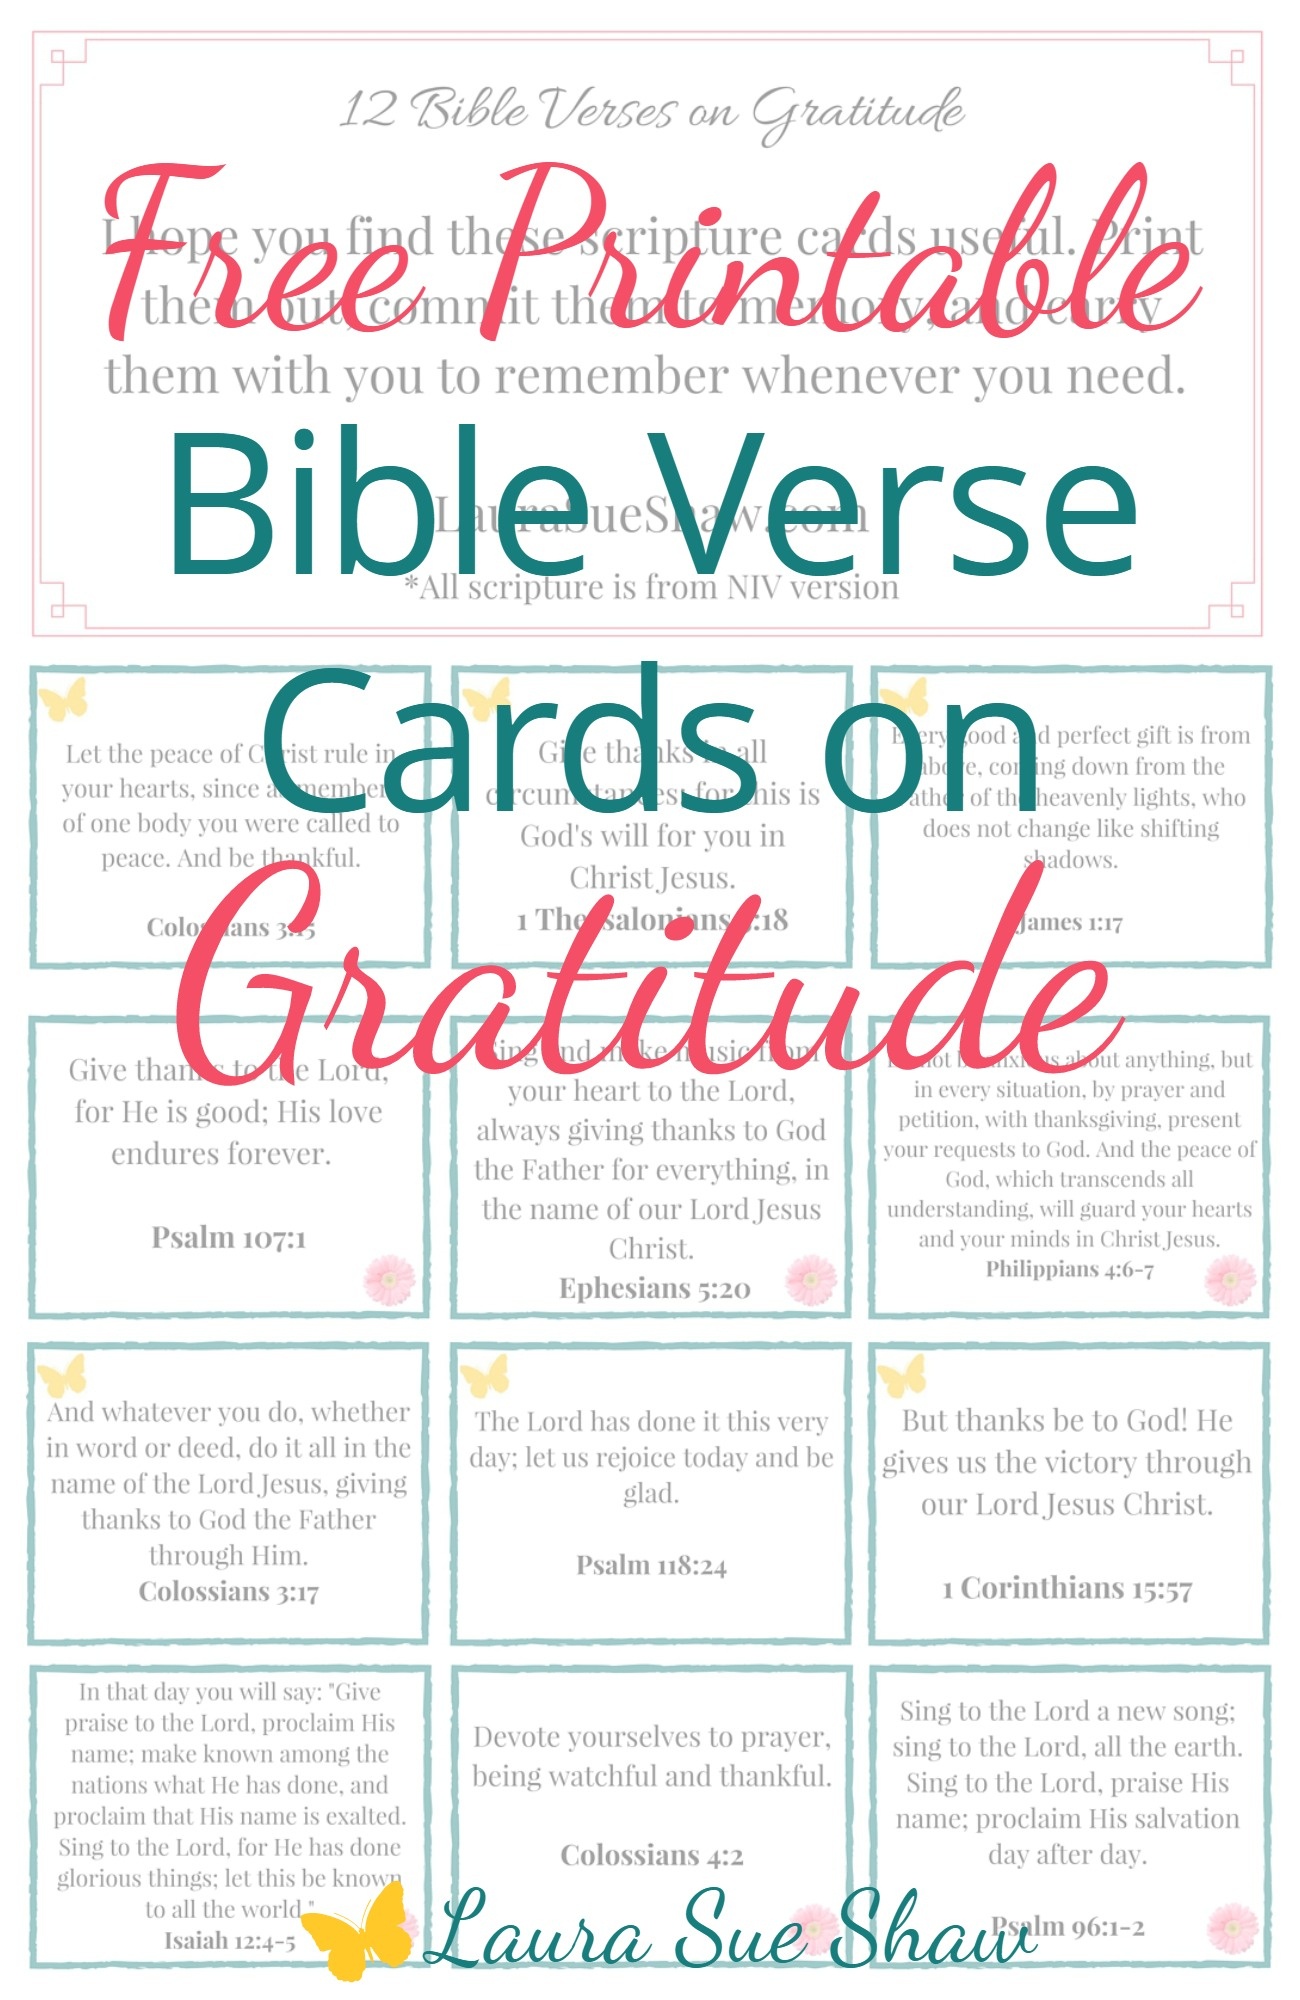 Free Printable Bible Verse Cards On Gratitude - Laura Sue Shaw - Free Printable Bible Verse Cards